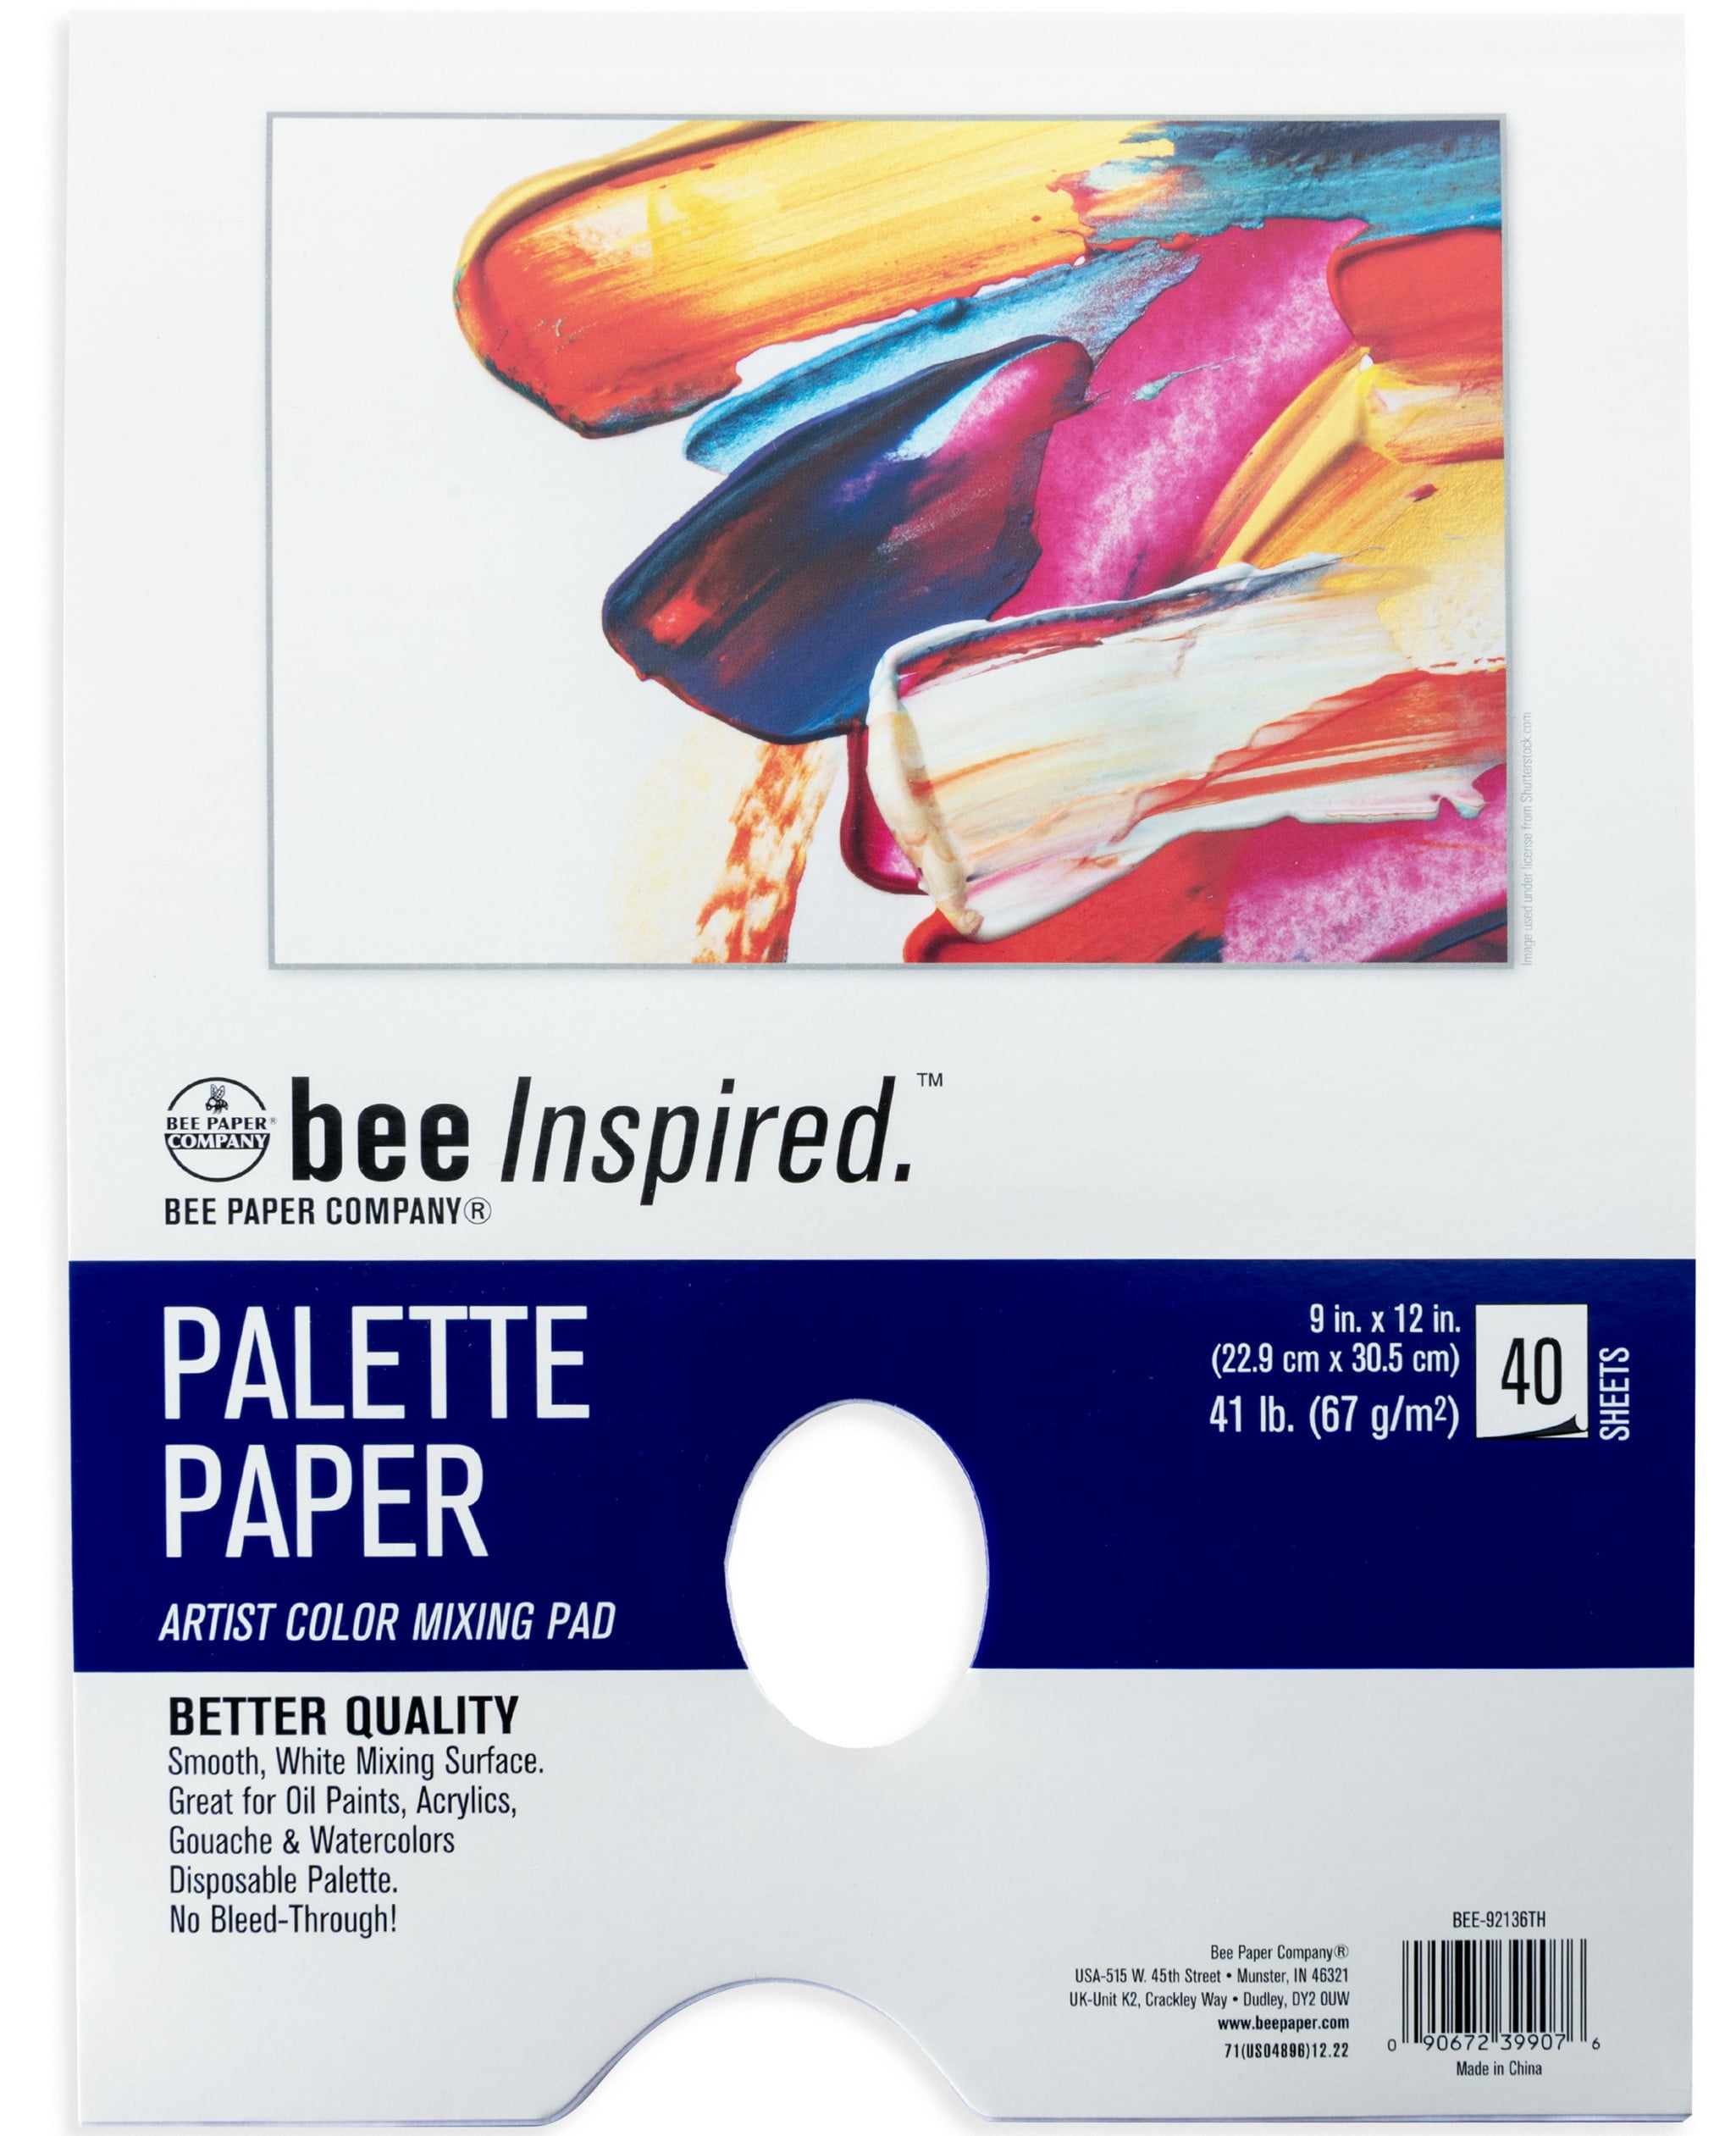 Notes-Art-Pads-Bundled-5-Colours-per-Size 4x 3In (10x7cm)